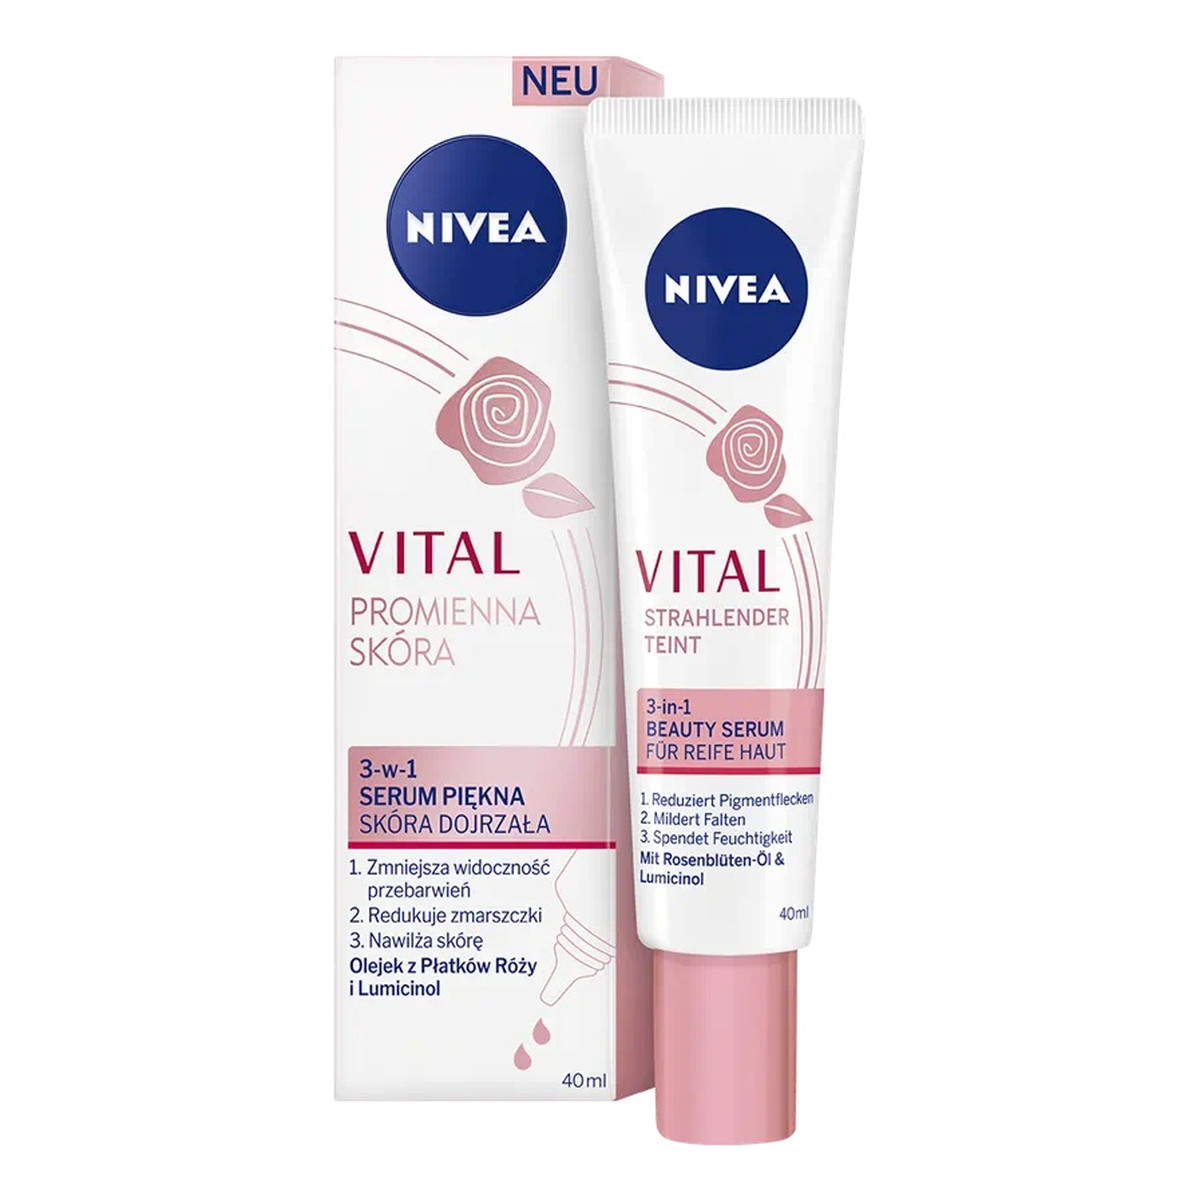 Nivea Vital promienna skóra 3w1 serum piękna 40ml